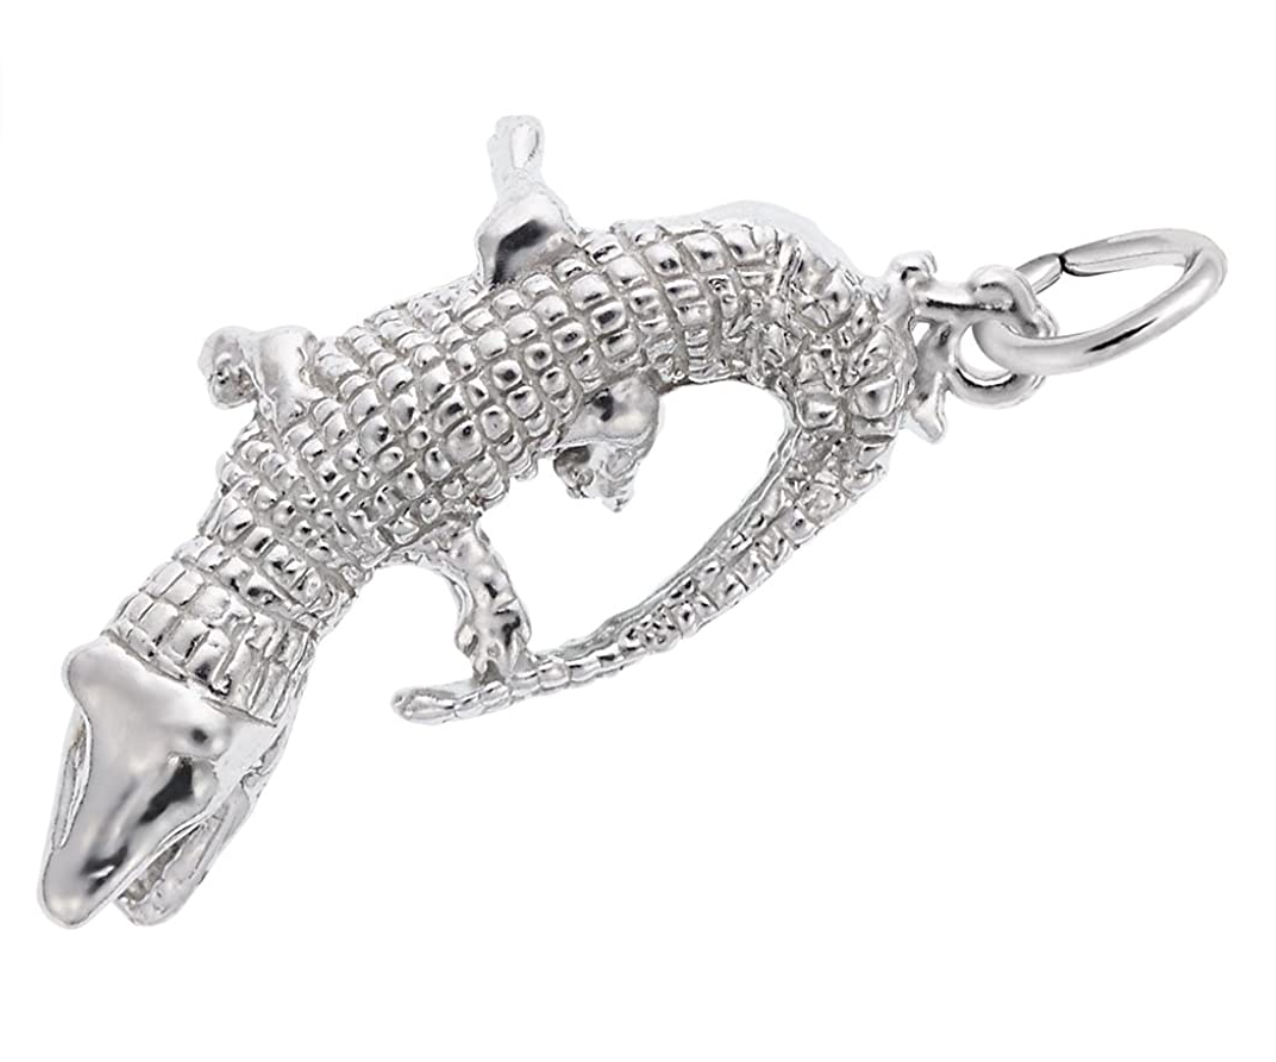 14K Gold Alligator Pendant Small Crocodile Charm Bracelet Gator Jewelry Birthday Gift 925 Sterling Silver